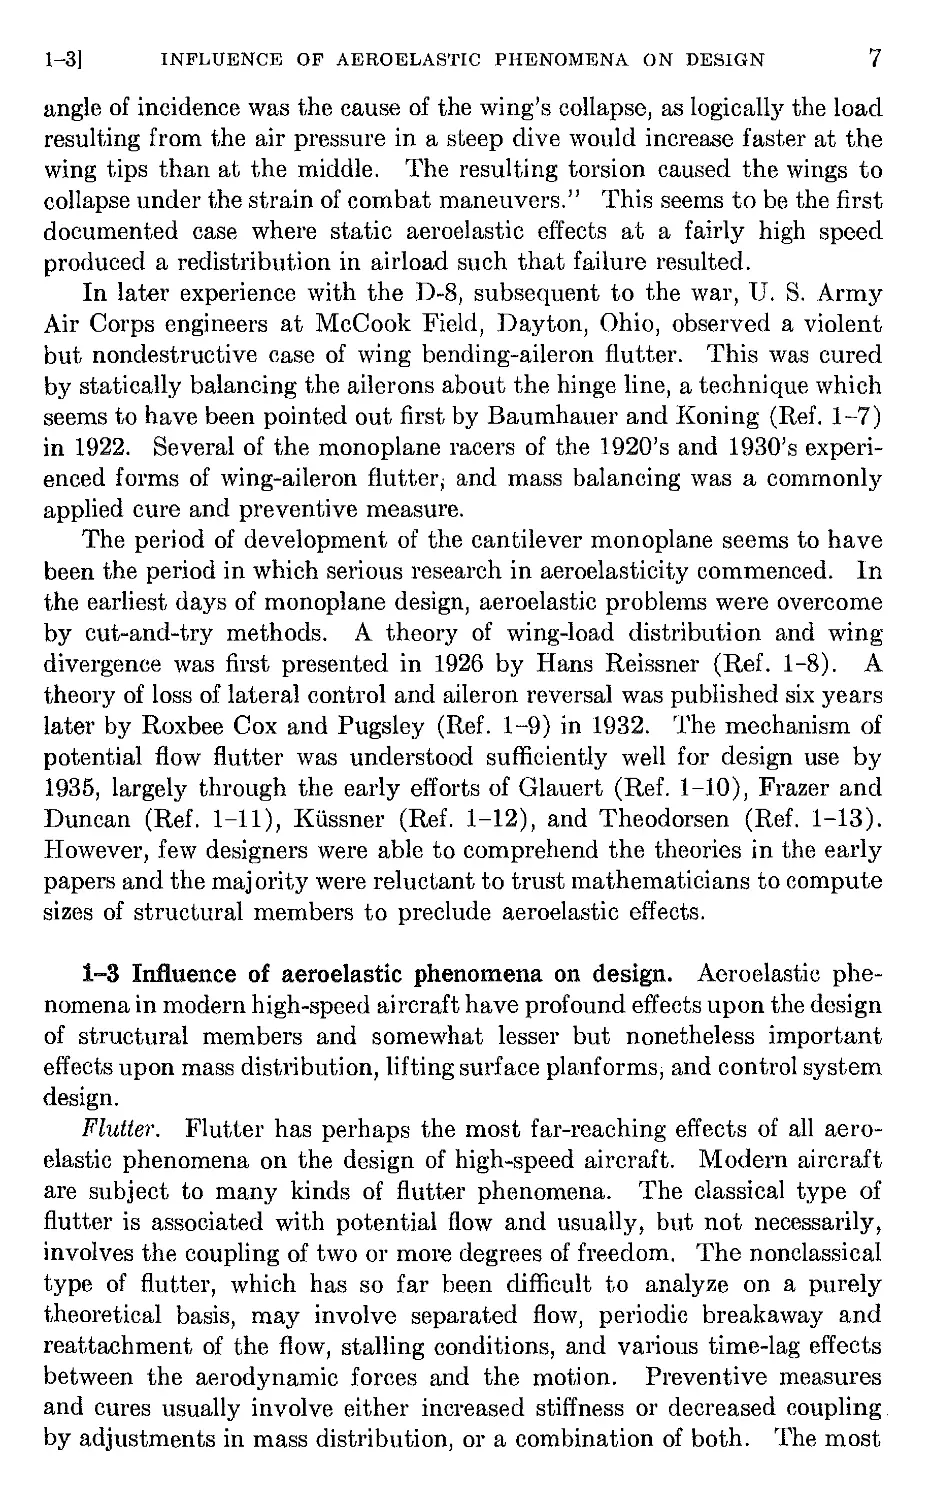 1.3 Influence of aeroelastic phenomena on design